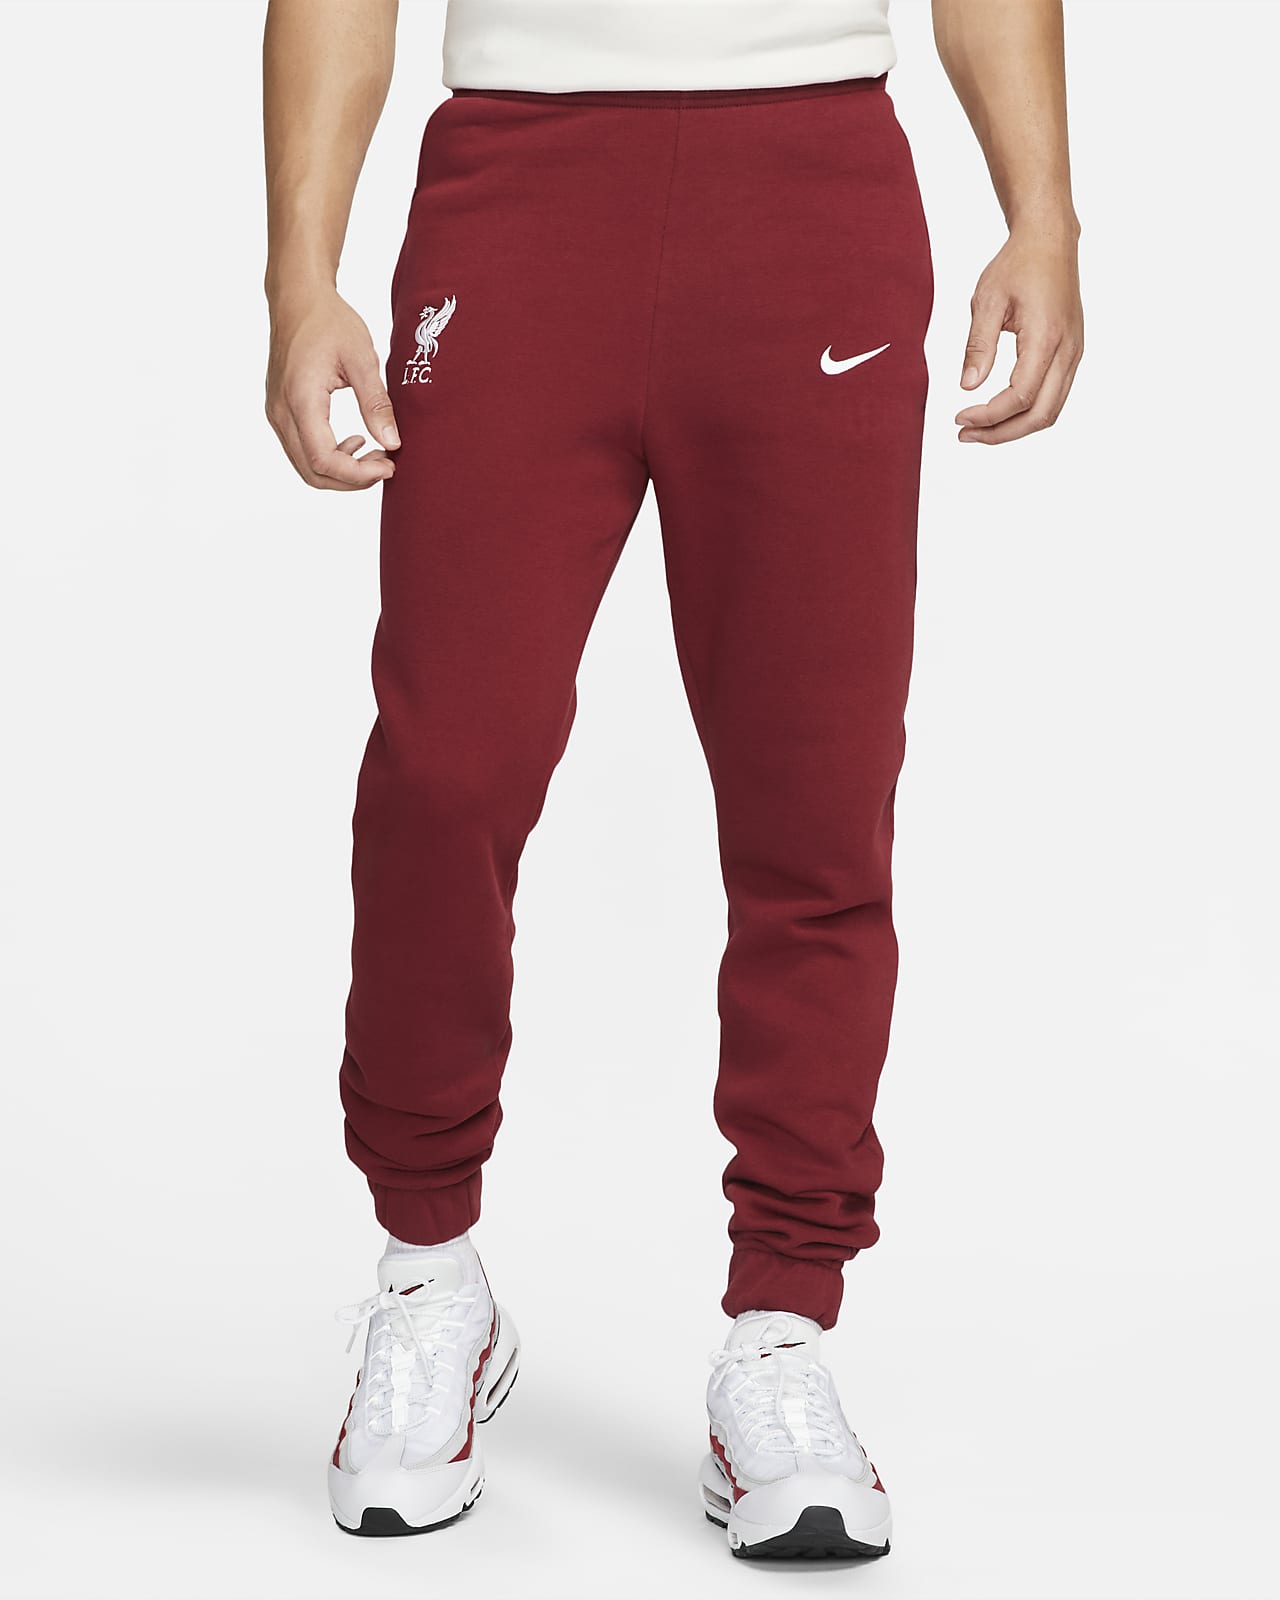 Liverpool FC Men's Nike Soccer Fleece Pants.